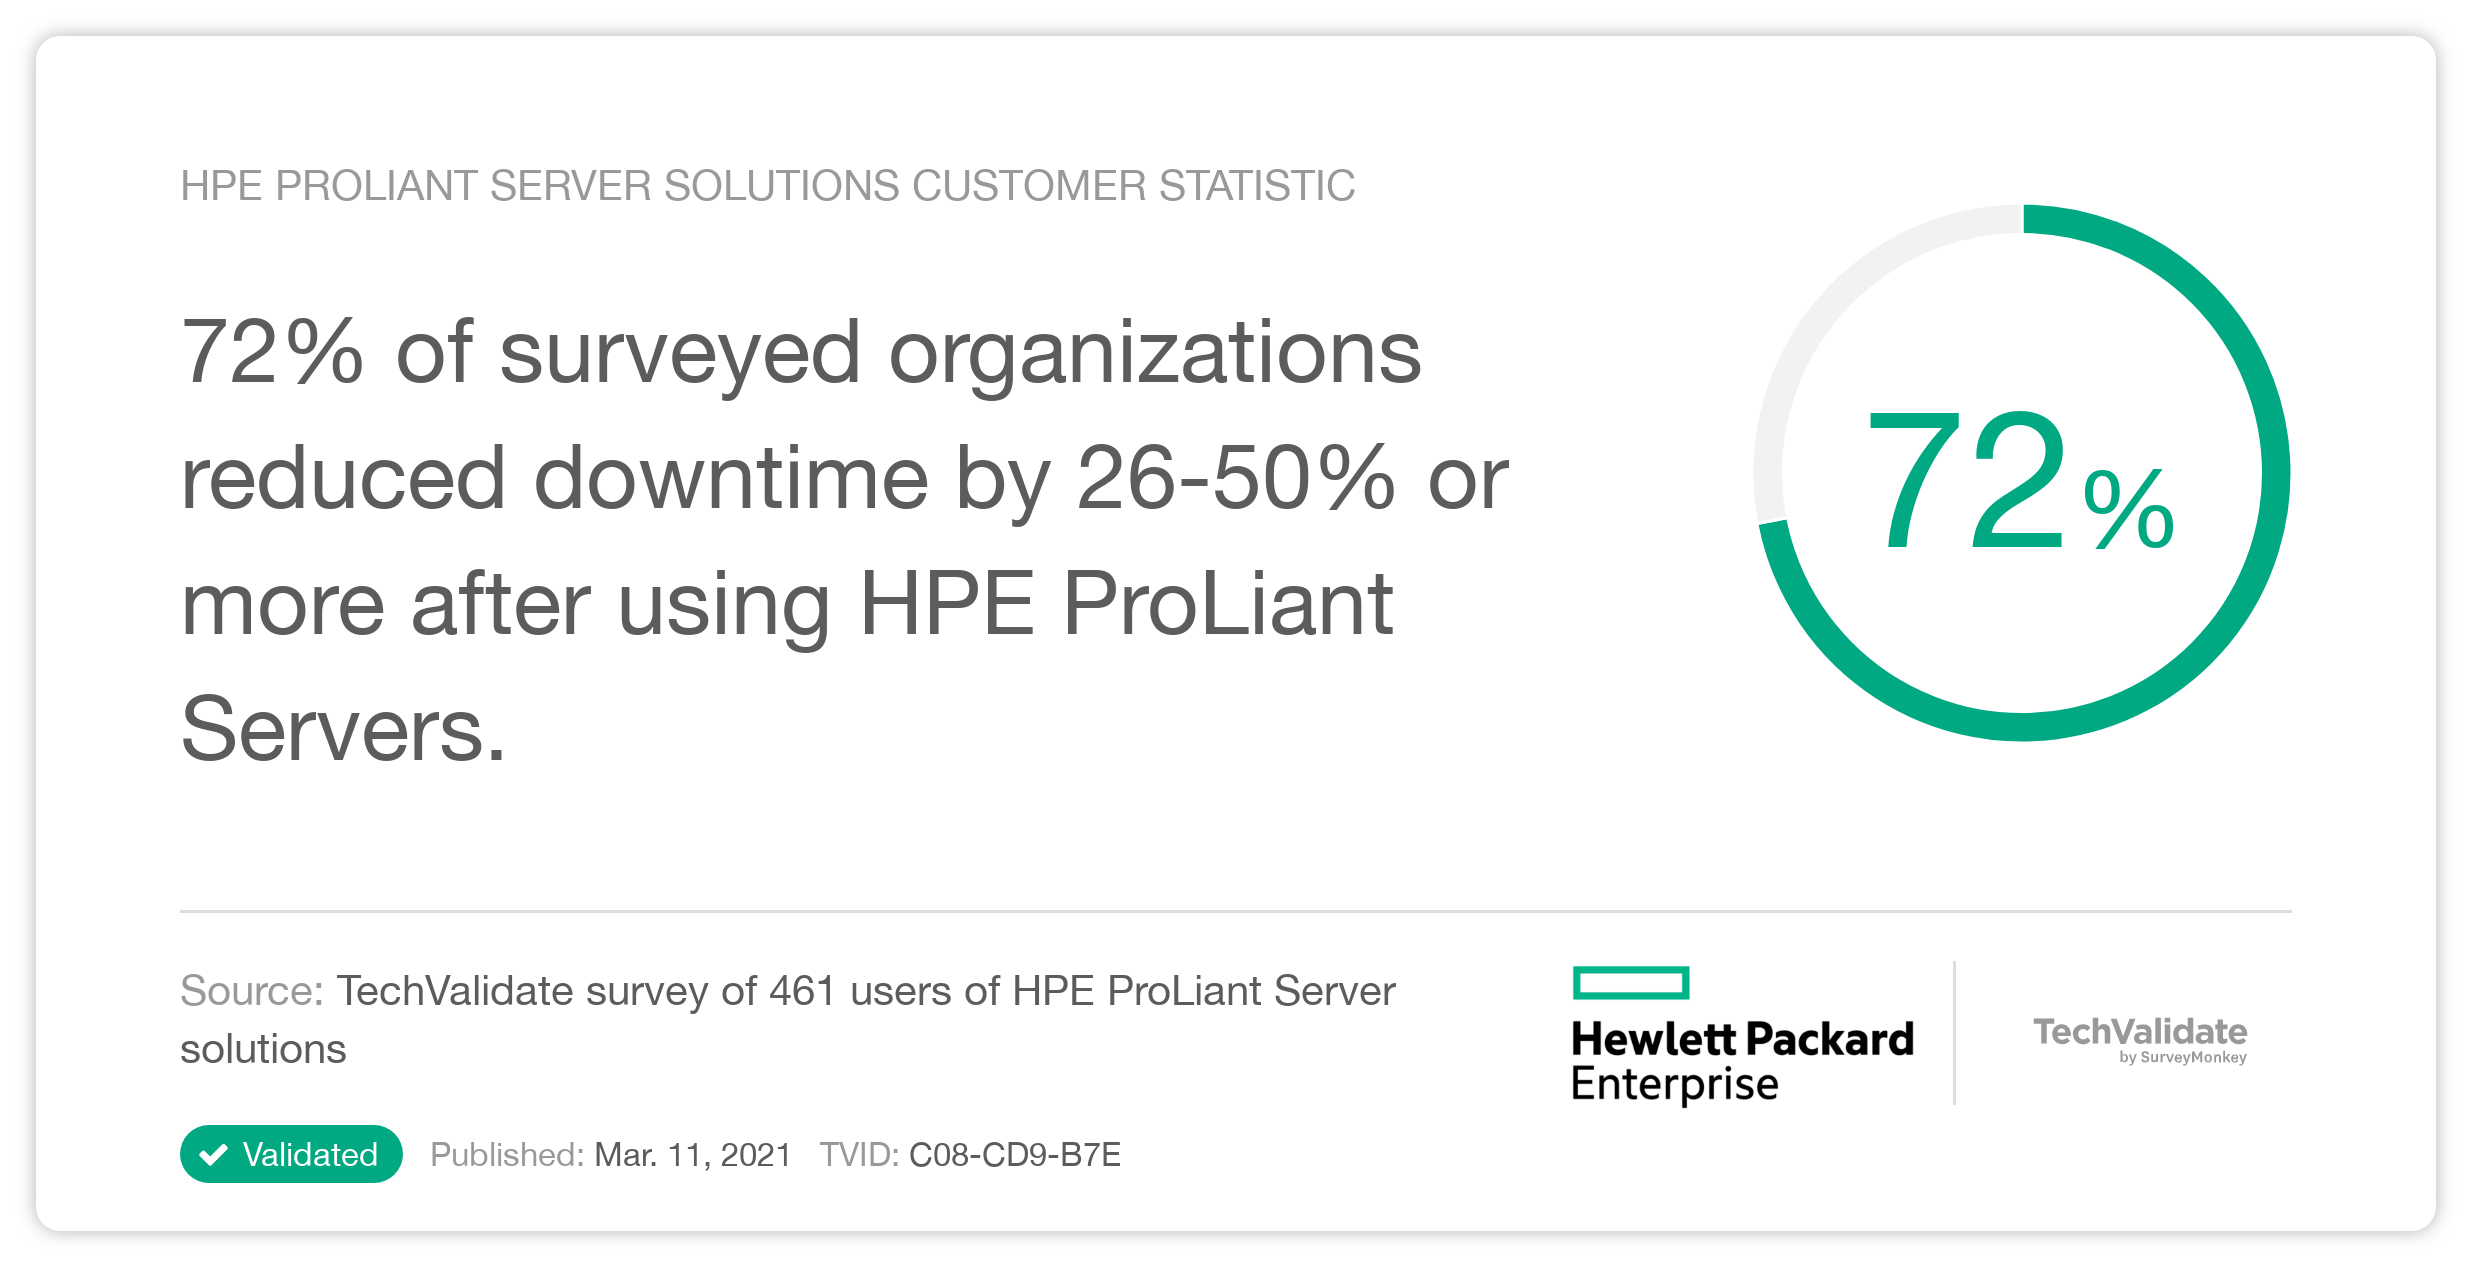 HPE ProLiant Server solutions Customer Statistic